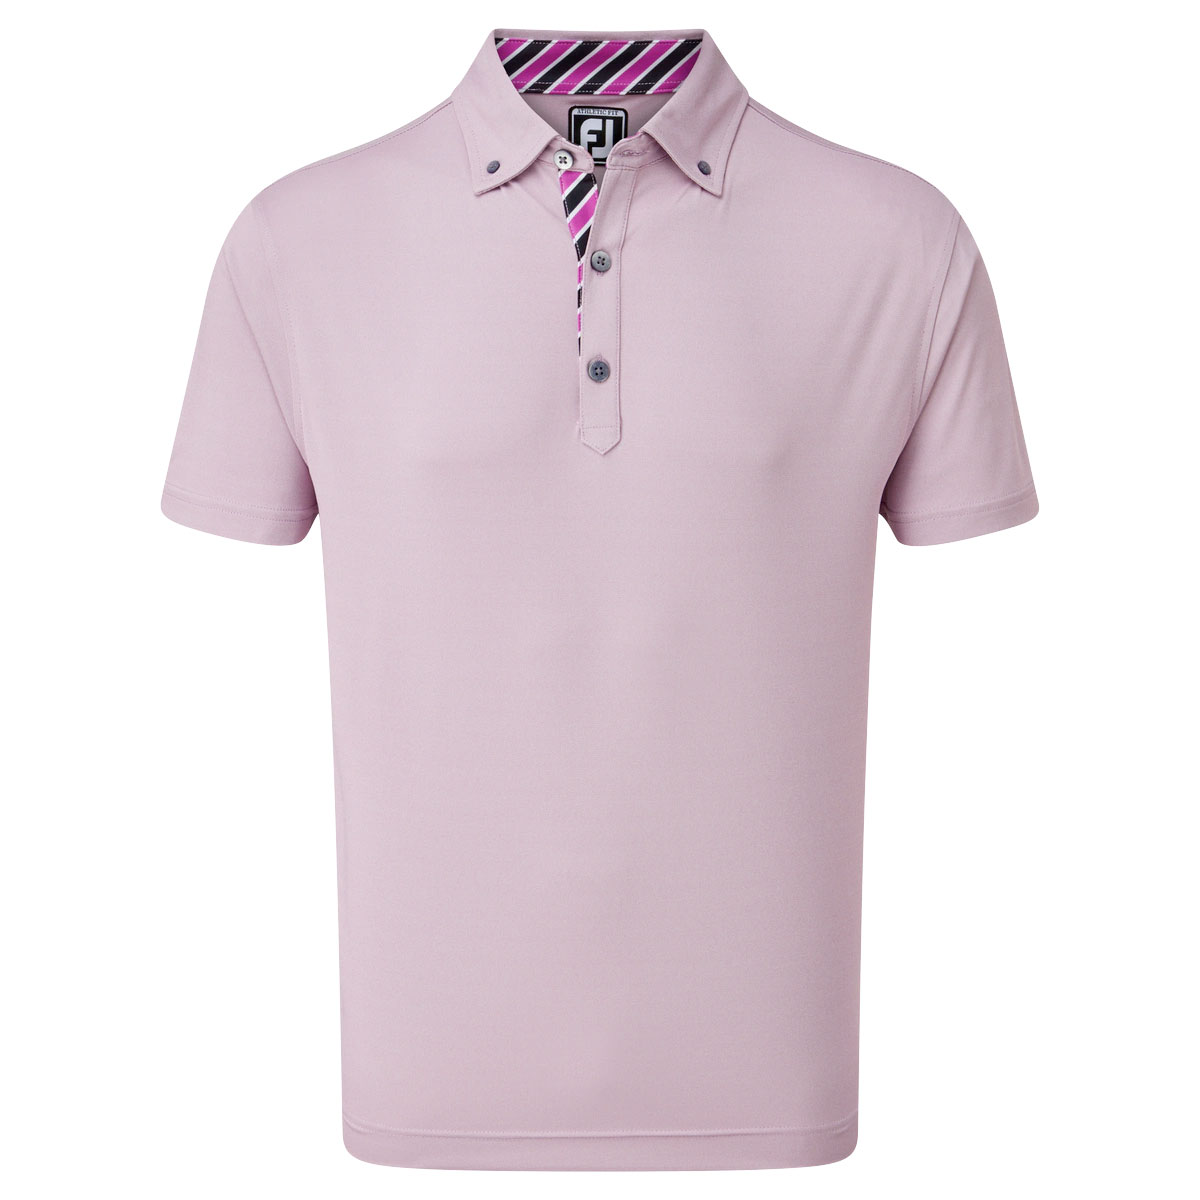 FootJoy Birdseye Jacquard with Stripe Trim Mens Golf Polo Shirt  - Mulberry